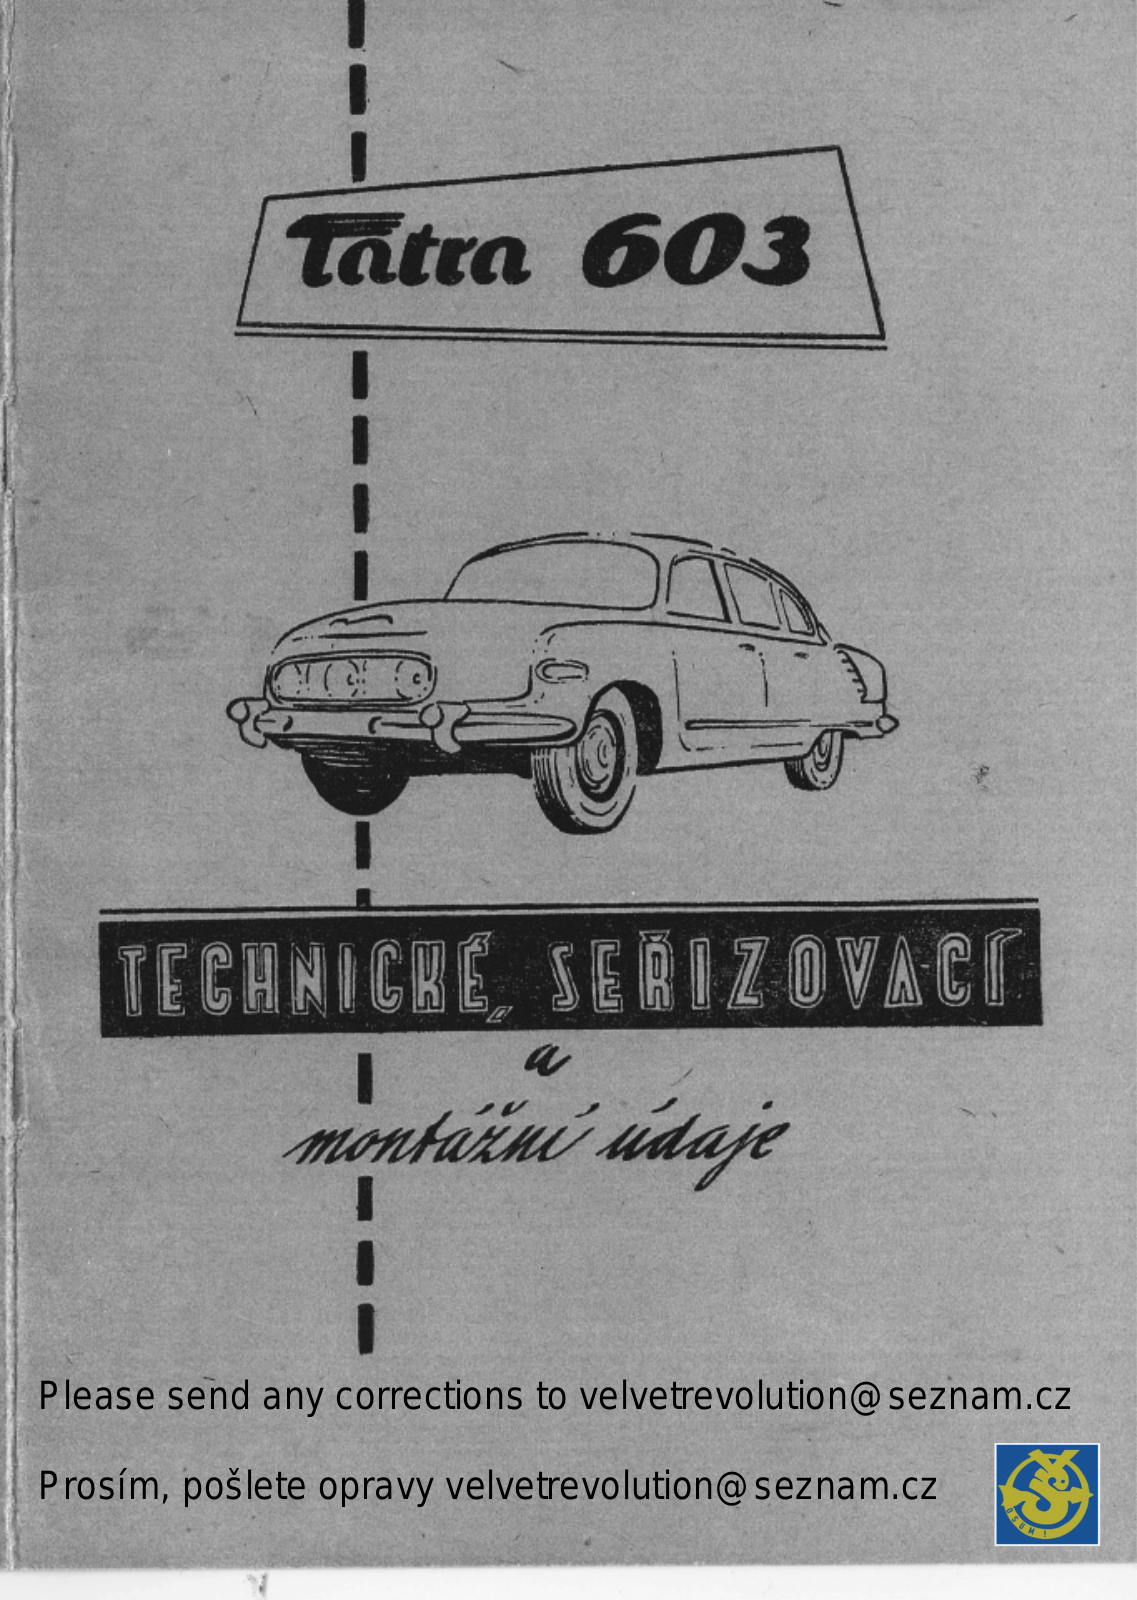 Tatra 603 Service Manual